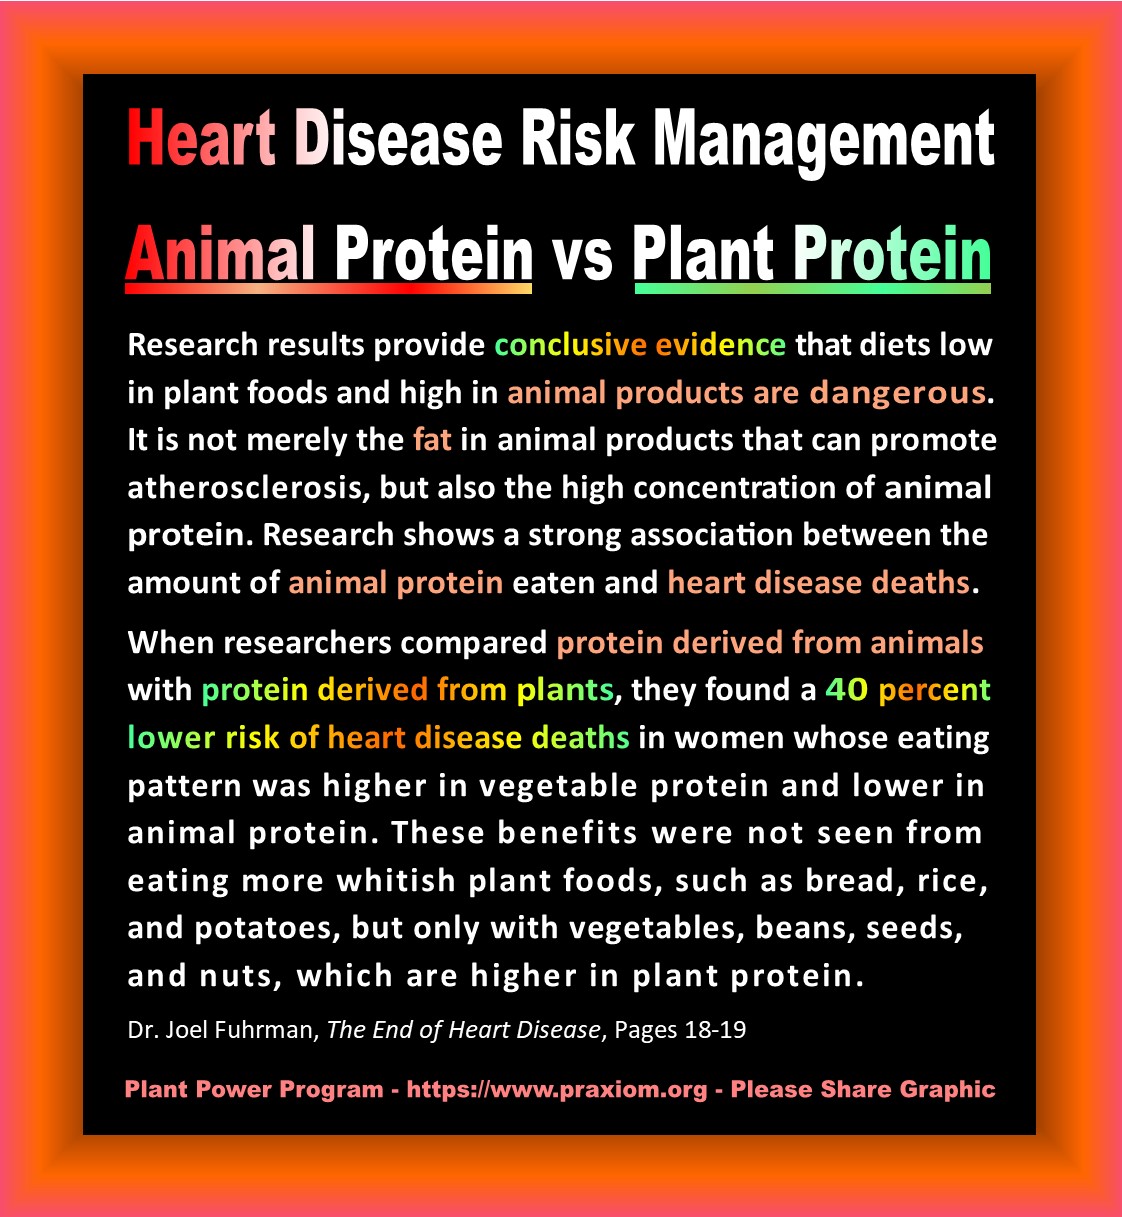 Heart Disease Risk Management - Animal Protein vs Plant Protein - Dr. Joel Fuhrman